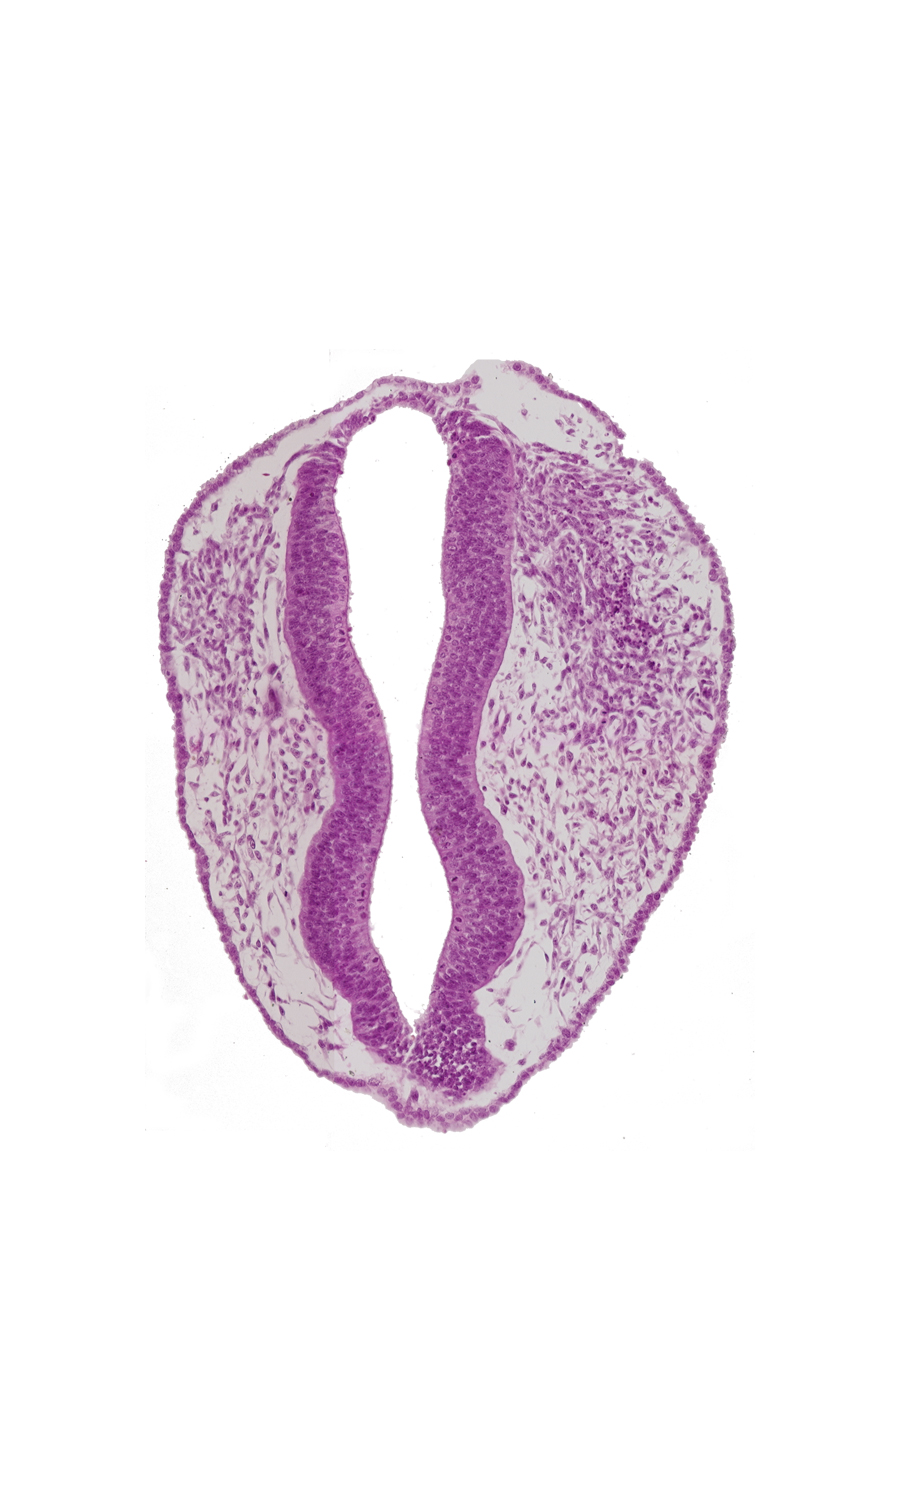 mesencephalon (M2), mesencoel, rhombencephalon (Rh. 1), rhombencephalon (Rh. 2), rhombencoel (fourth ventricle), roof plate, surface ectoderm, trigeminal neural crest (CN V)